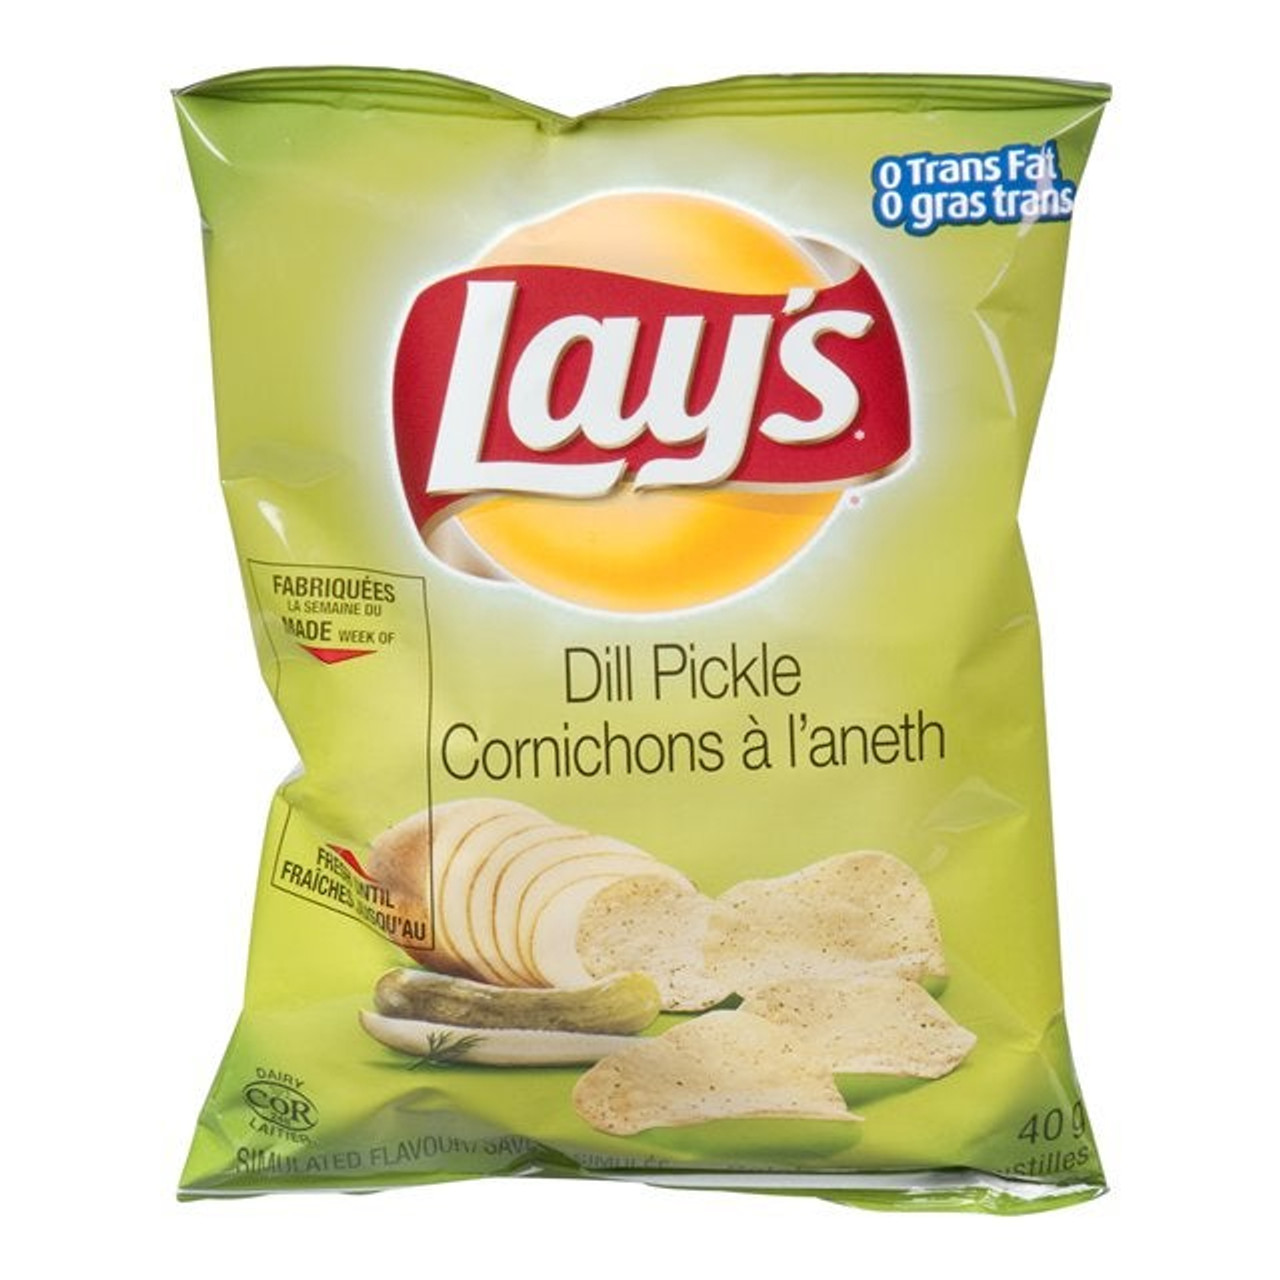 Lay's Dill Pickle Potato Chips, Trans Fat Compliant | 40G/Unit, 40 Units/Case